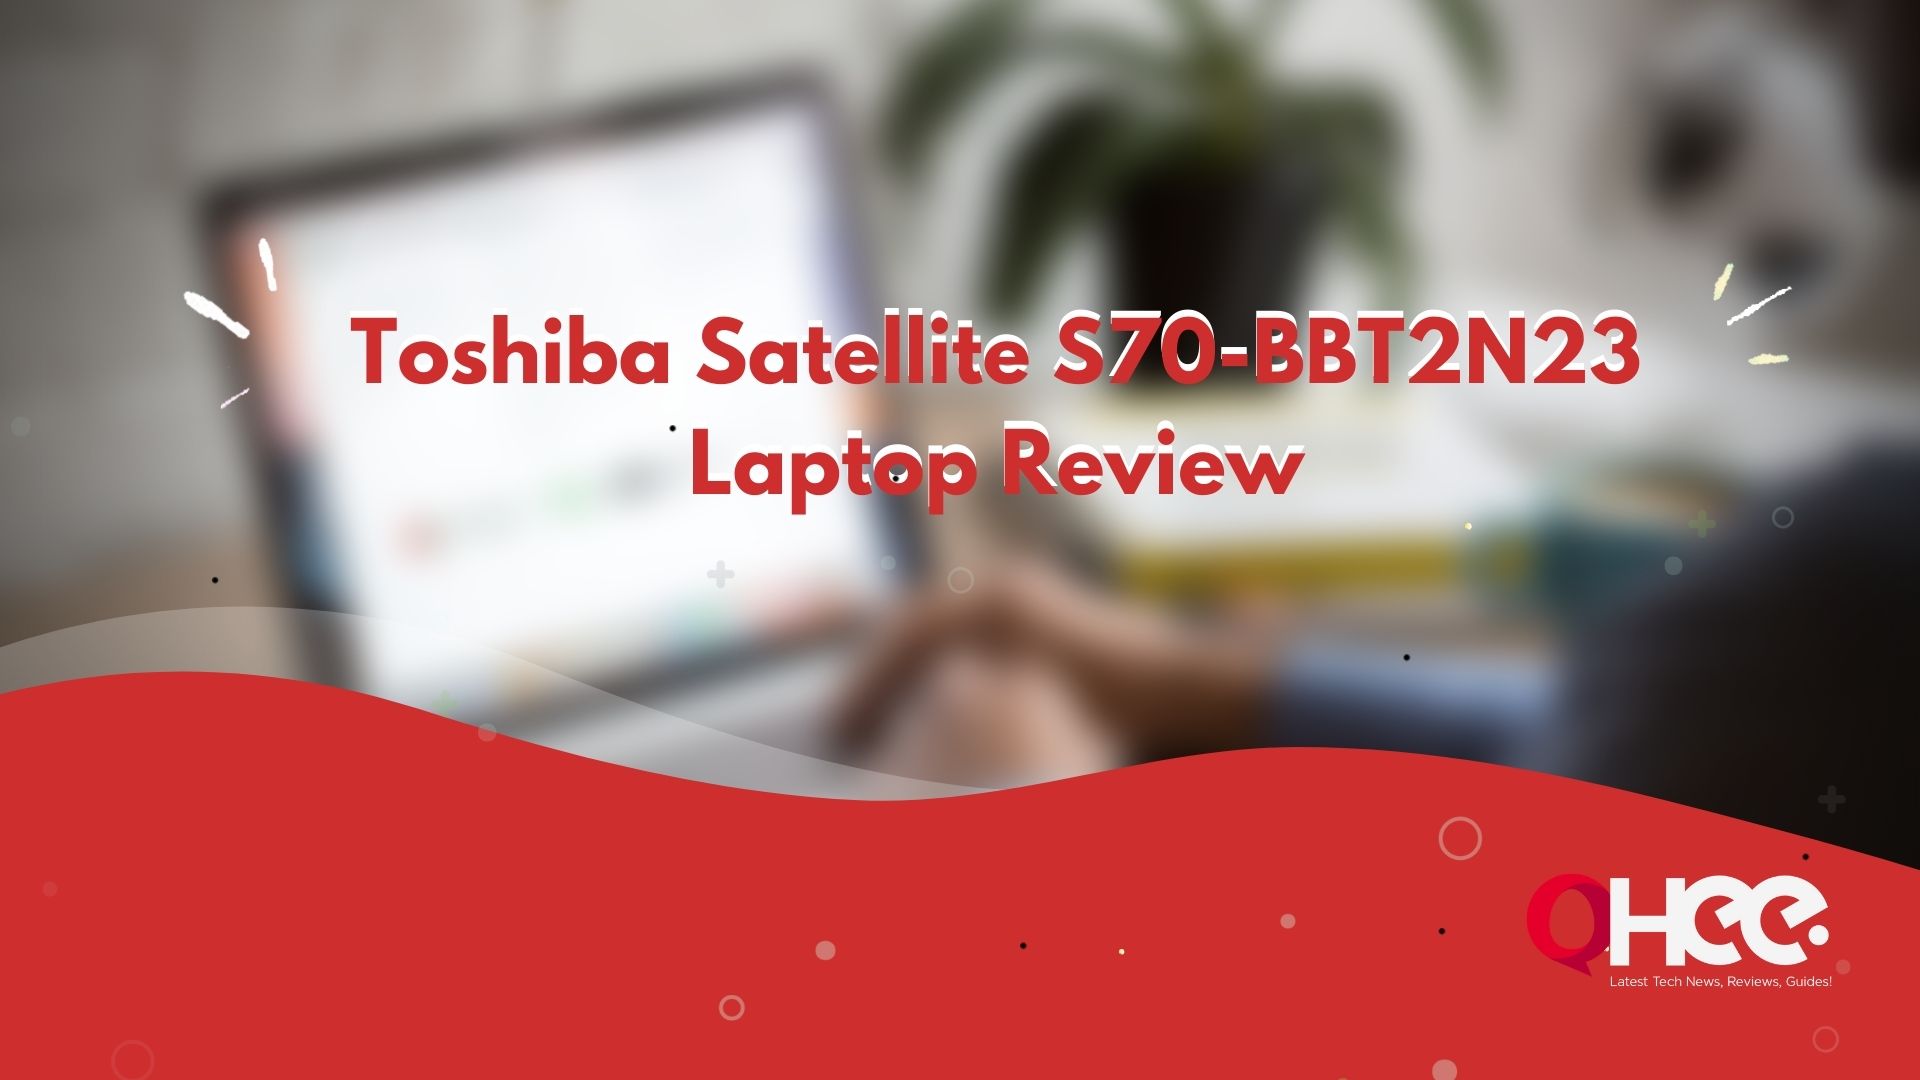 Toshiba Satellite S70-BBT2N23 Laptop Review